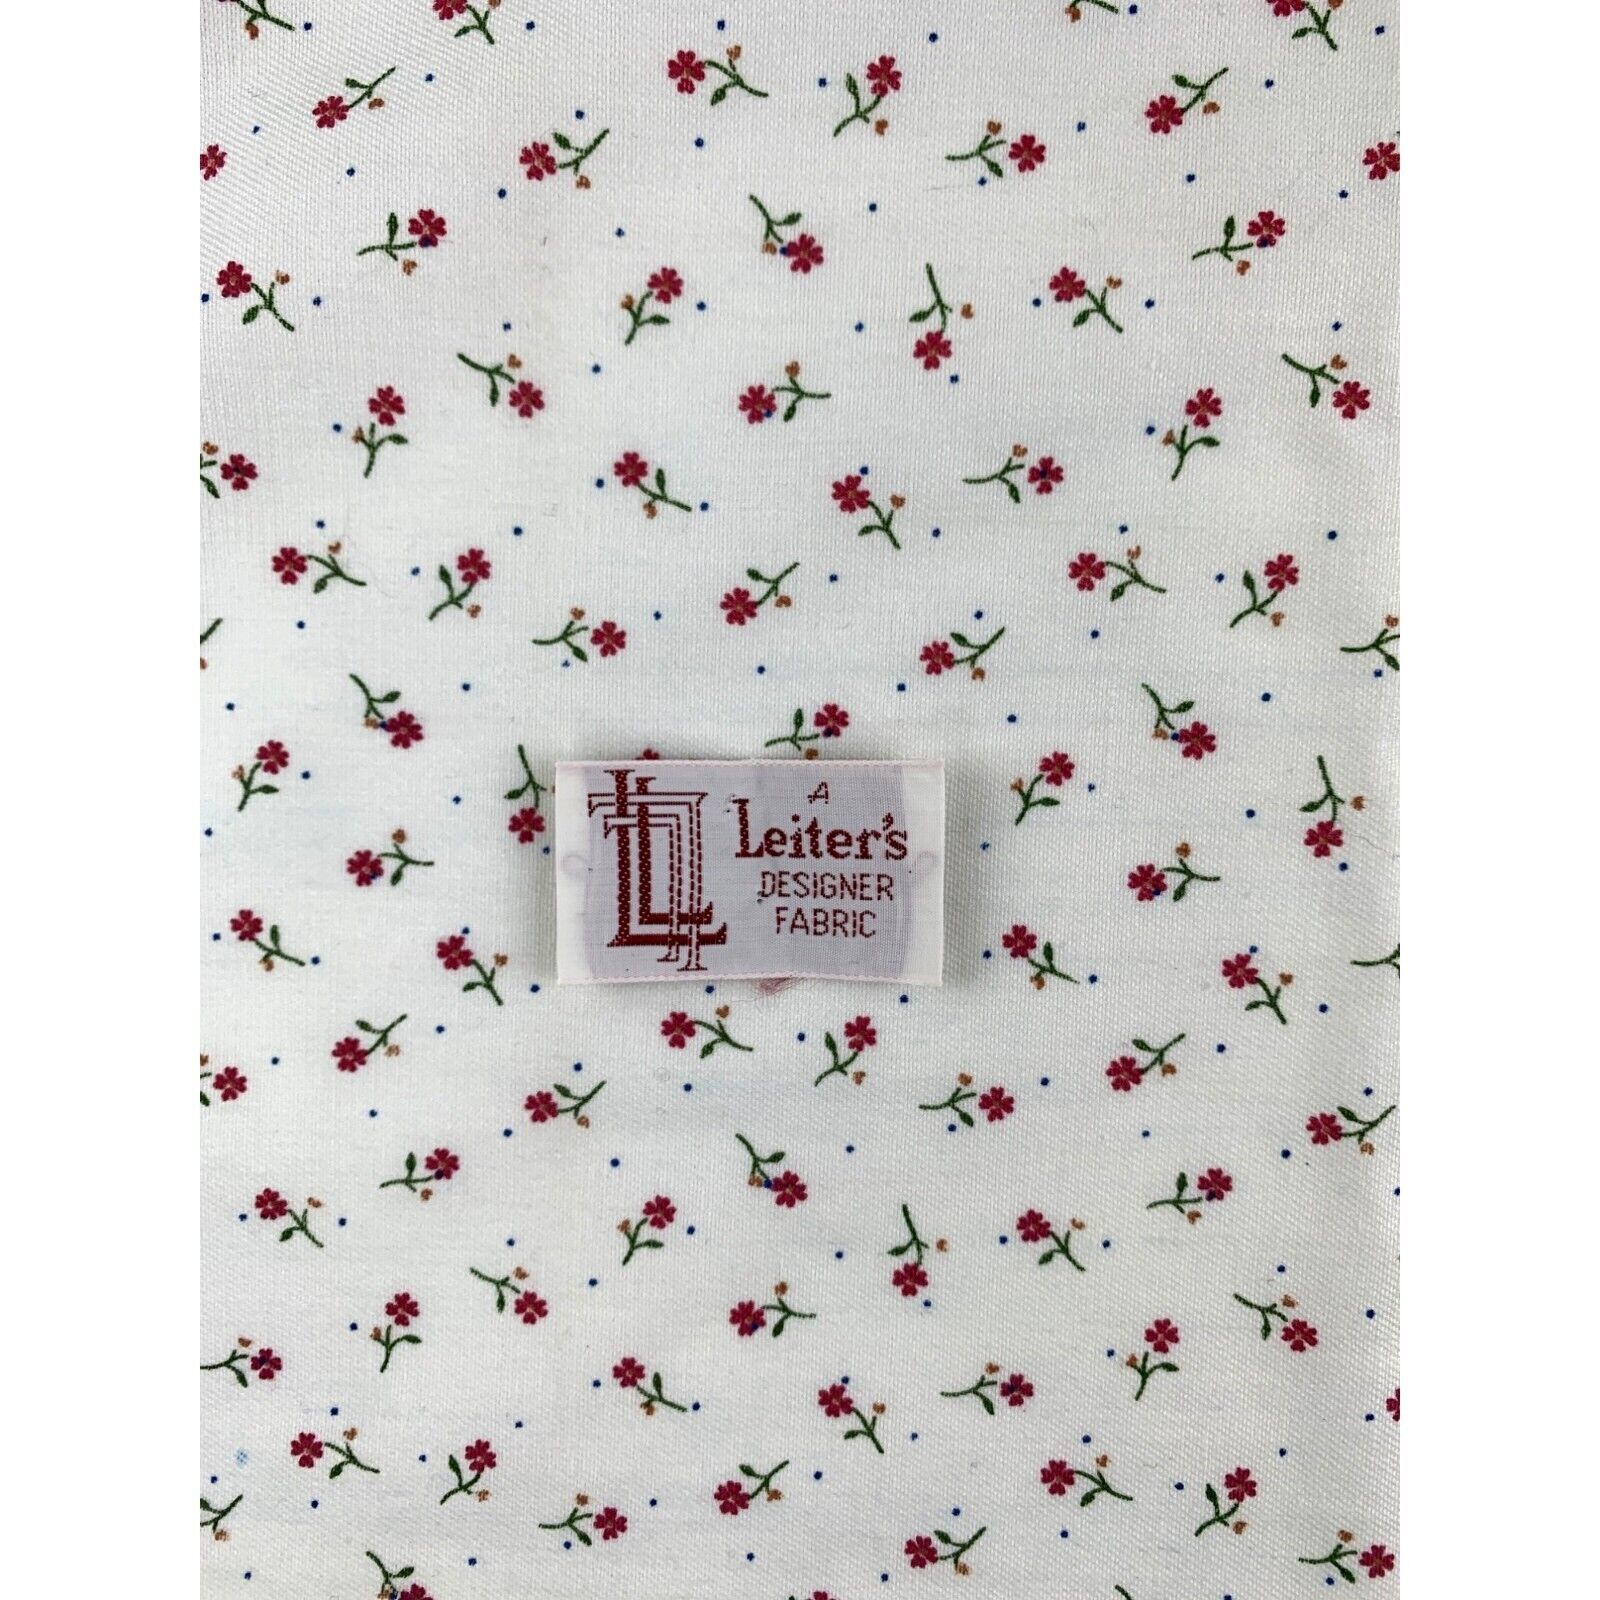 Primary image for Leiter's Designer Fabric Ditsy Floral Print 6 Yards Vintage 1970s Cotton Blend